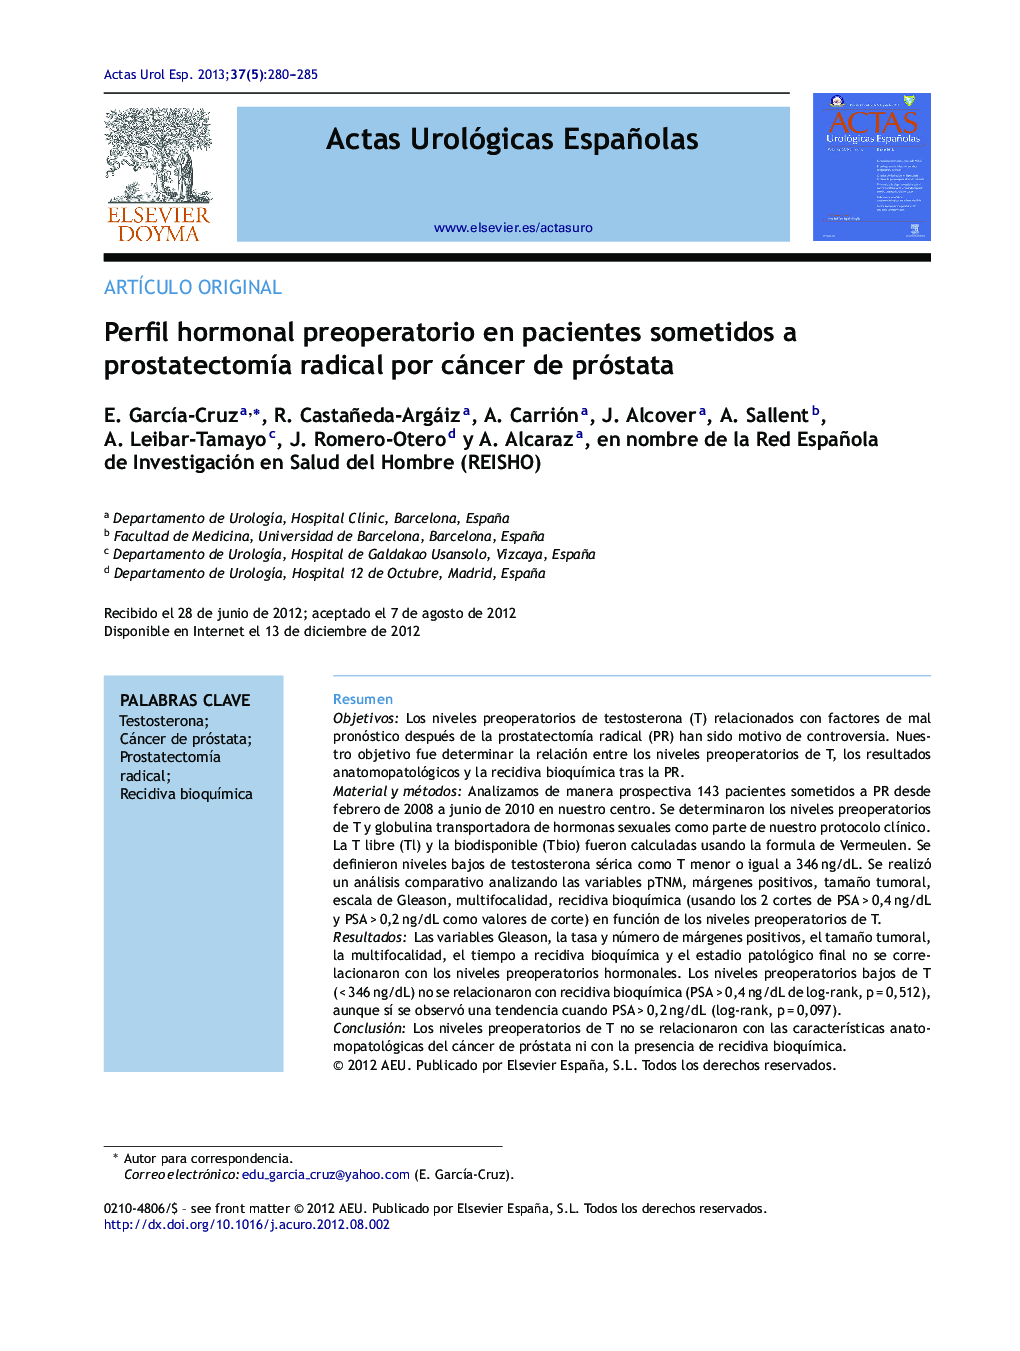 Perfil hormonal preoperatorio en pacientes sometidos a prostatectomÃ­a radical por cáncer de próstata